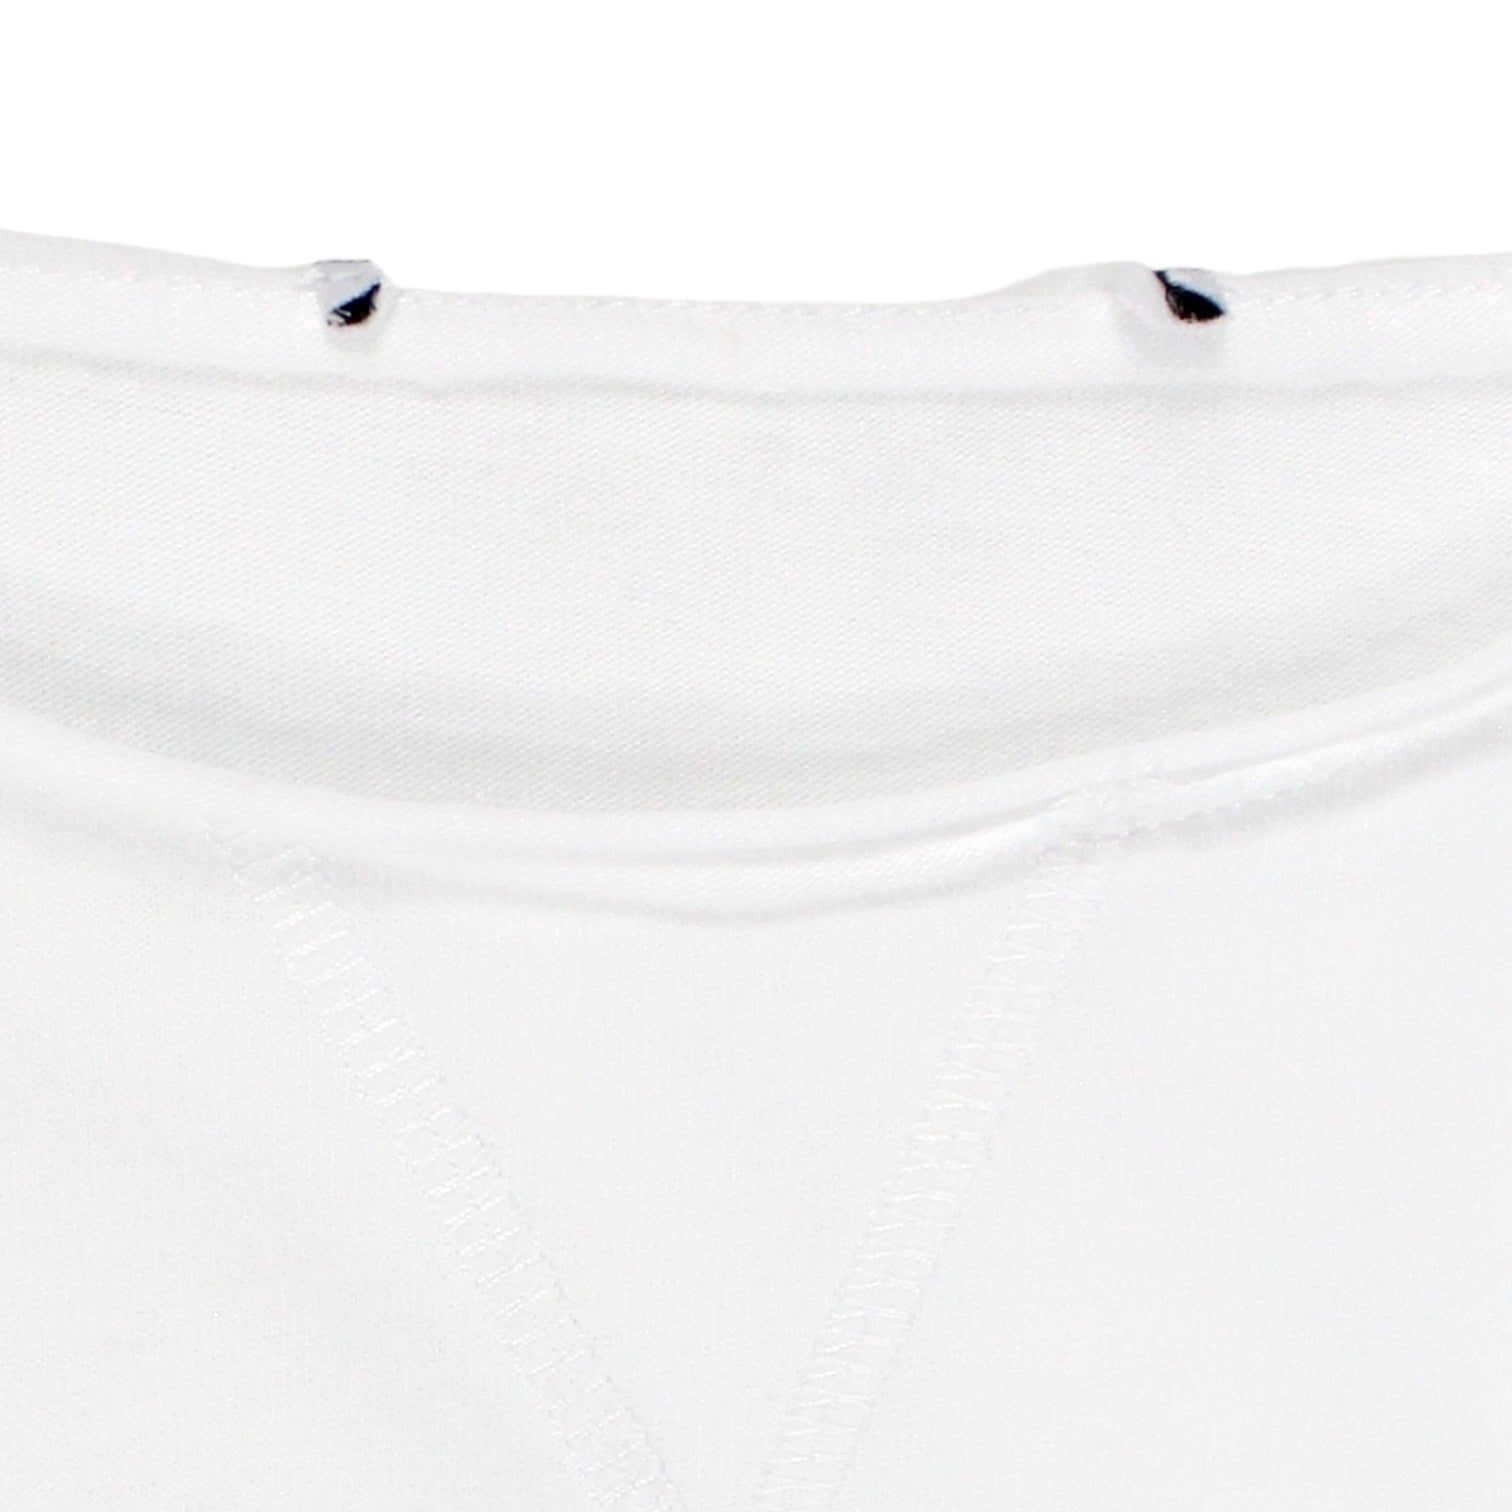 NRBY White Sweatshirt Style Top